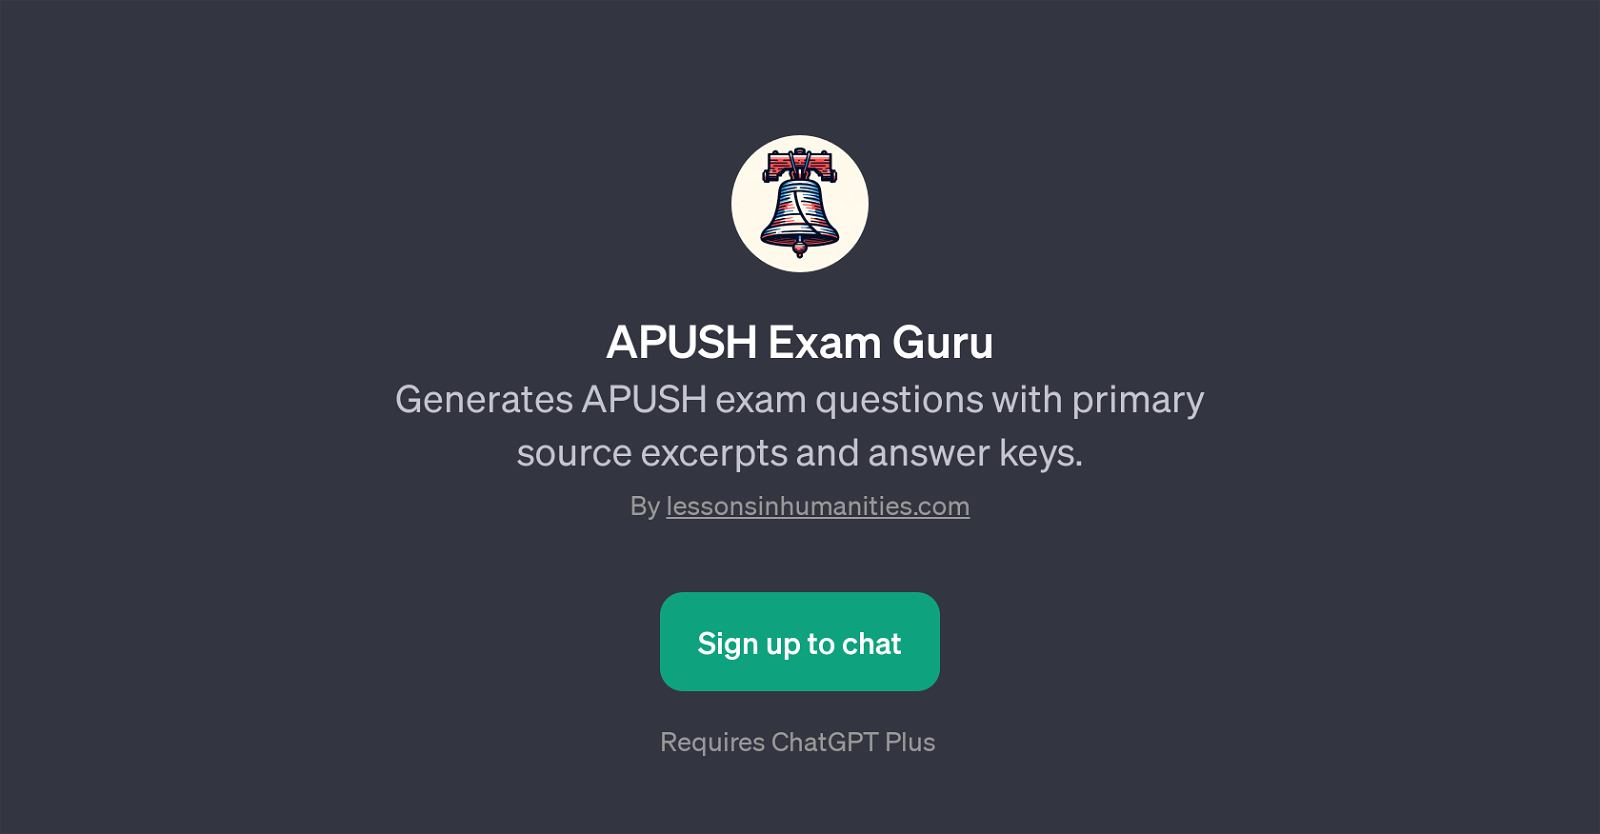 APUSH Exam Guru website